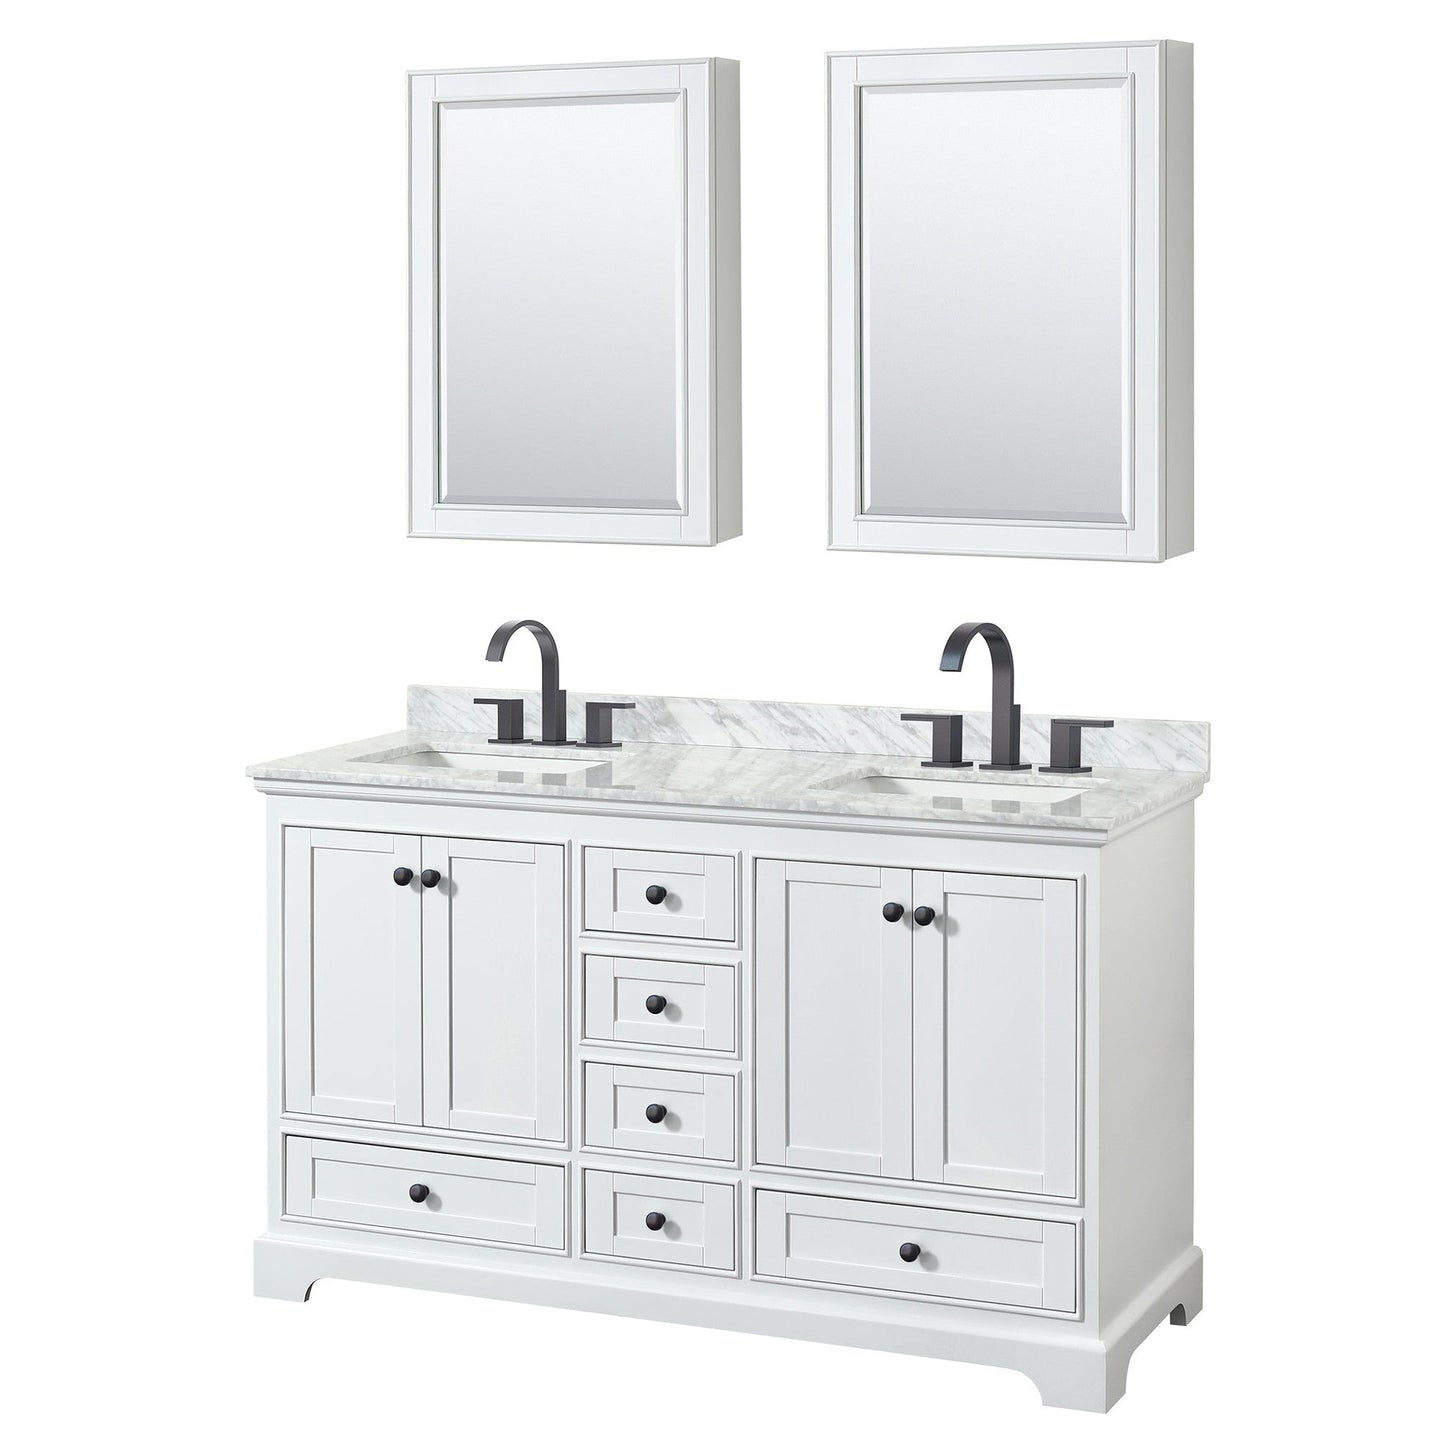 Deborah 60" Double Bathroom Vanity in White, White Carrara Marble Countertop, Undermount Square Sinks, Matte Black Trim, Medicine Cabinets